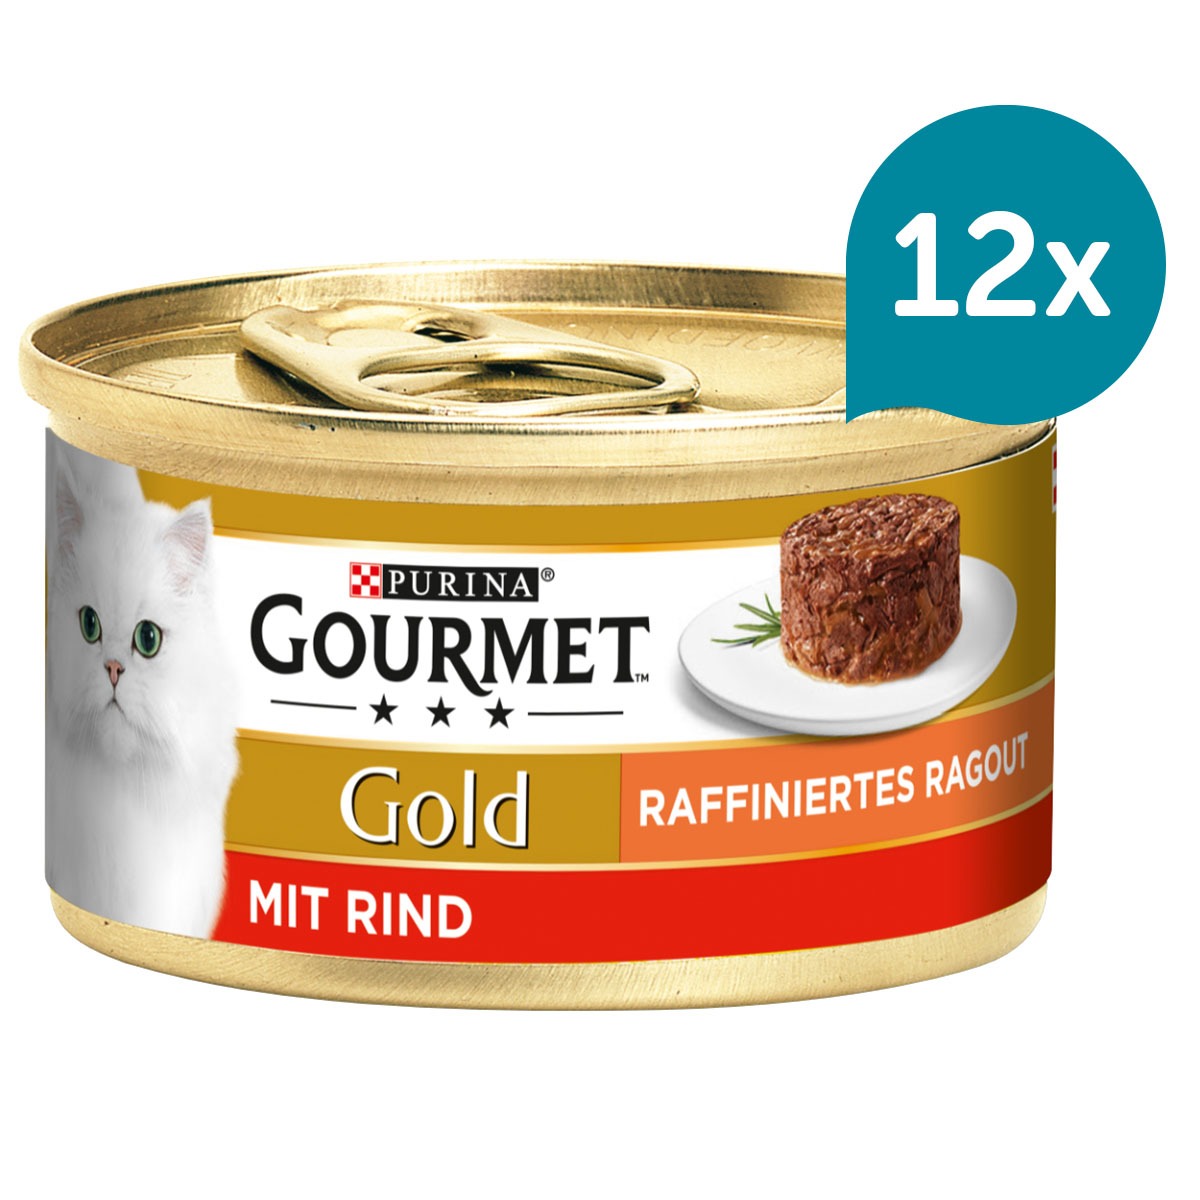 Gourmet Gold Raffiniertes Ragout – hovězí